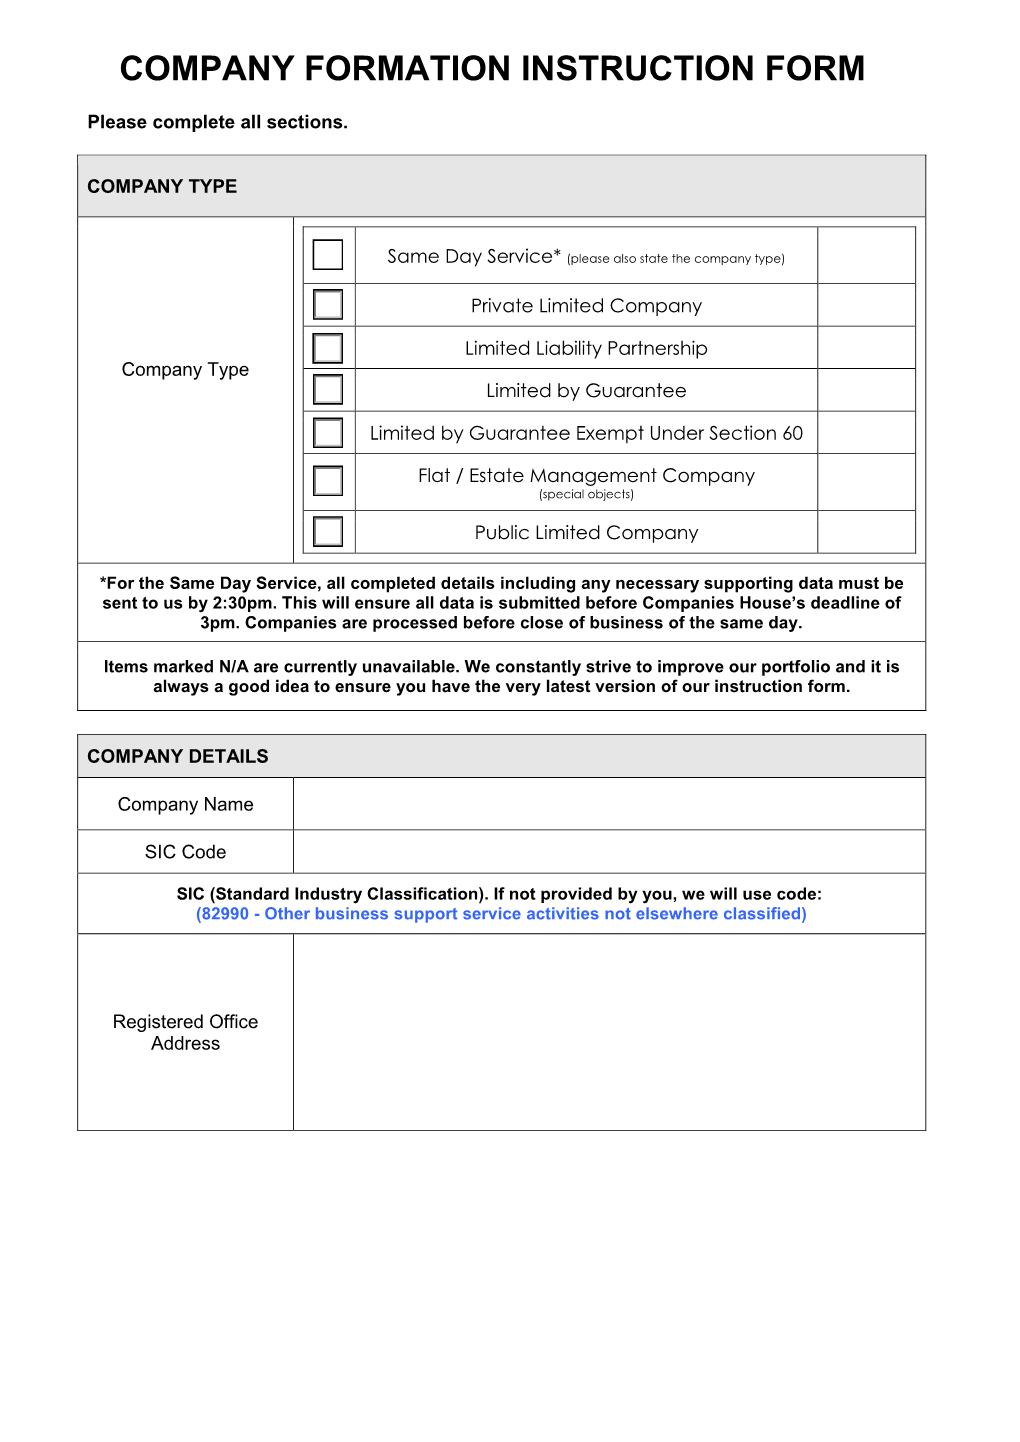 Company Formation Instruction Form